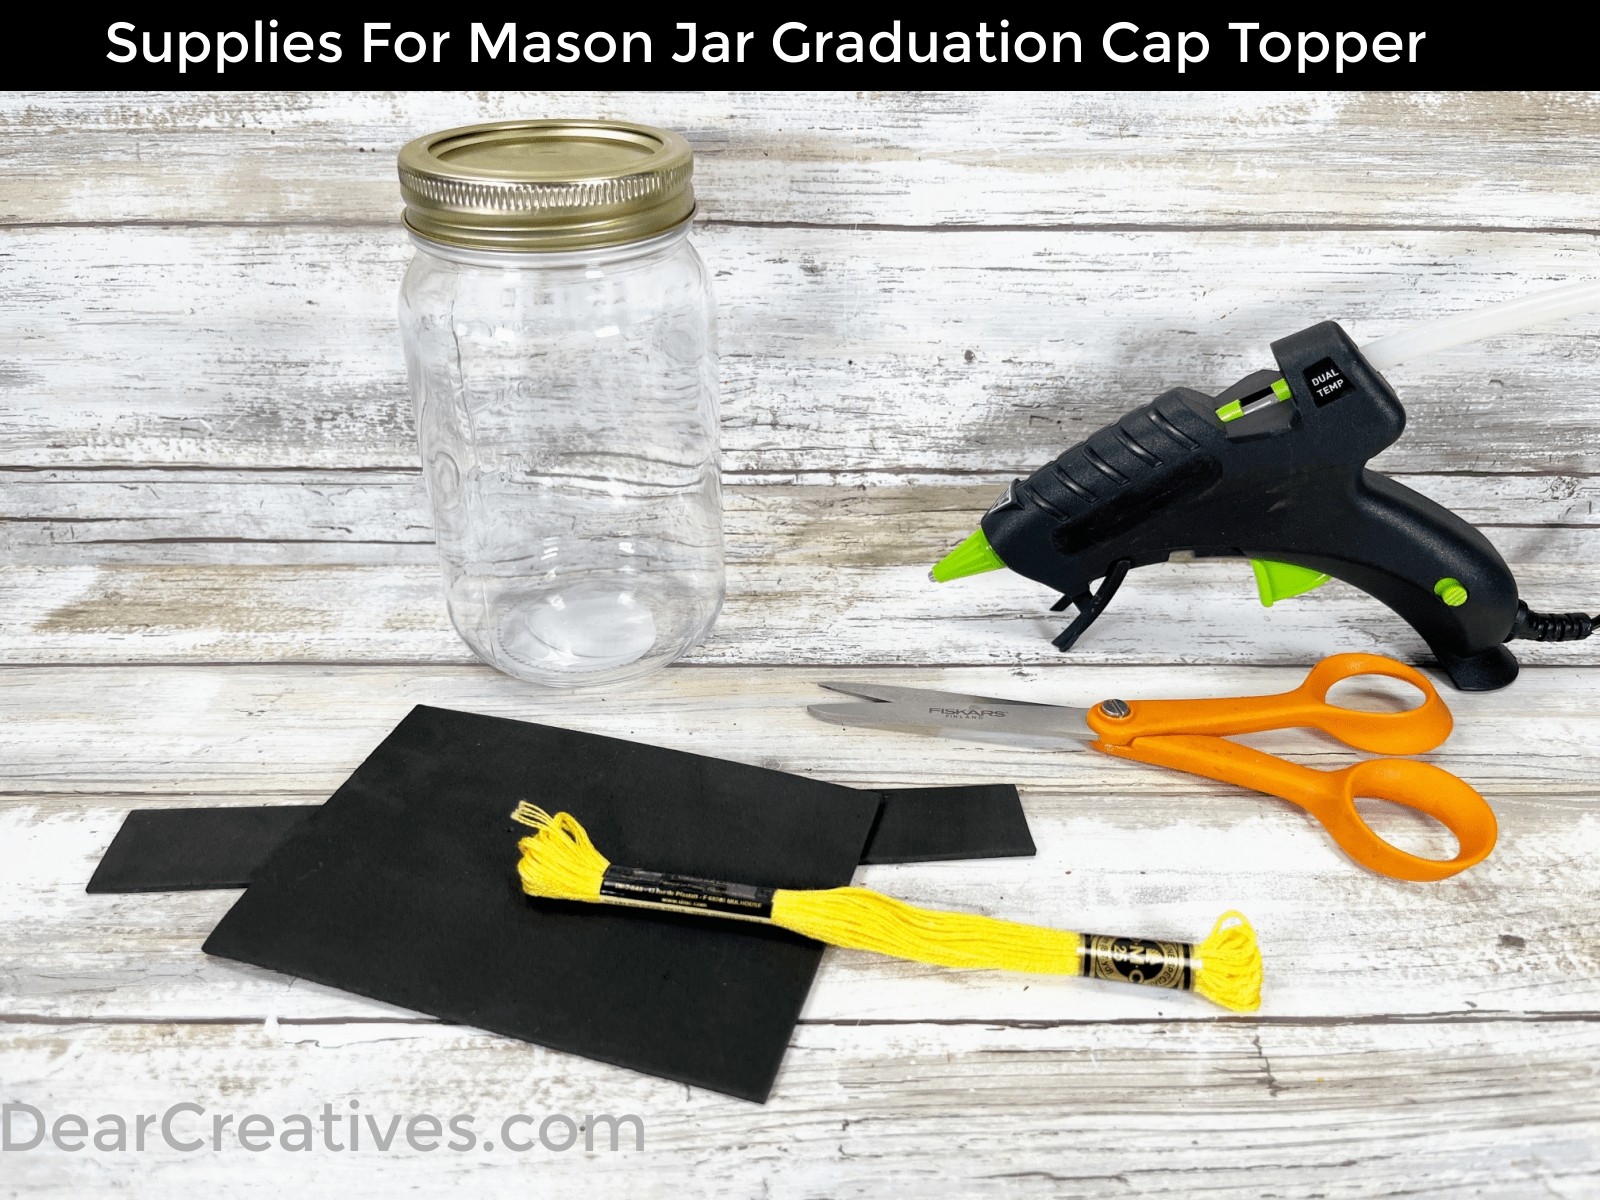 Supplies for making a mason jar graduation cap topper - DIY Graduation gift - template and instructions at DearCreaives.com